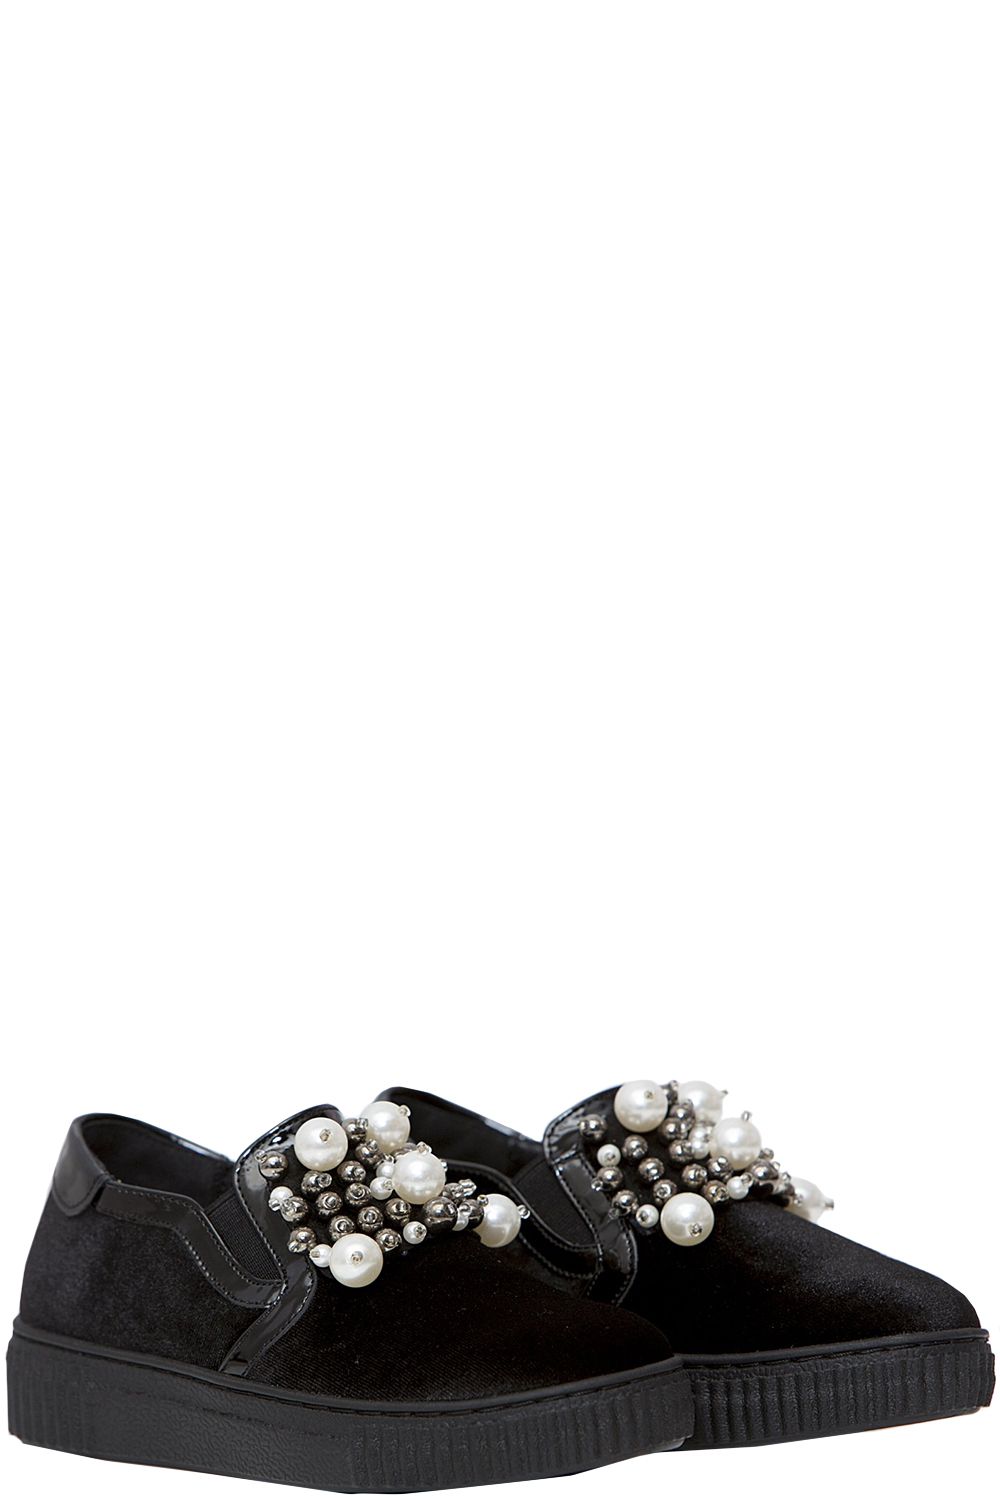 Ботинки Holala, размер 39, цвет черный HS0020T - фото 4